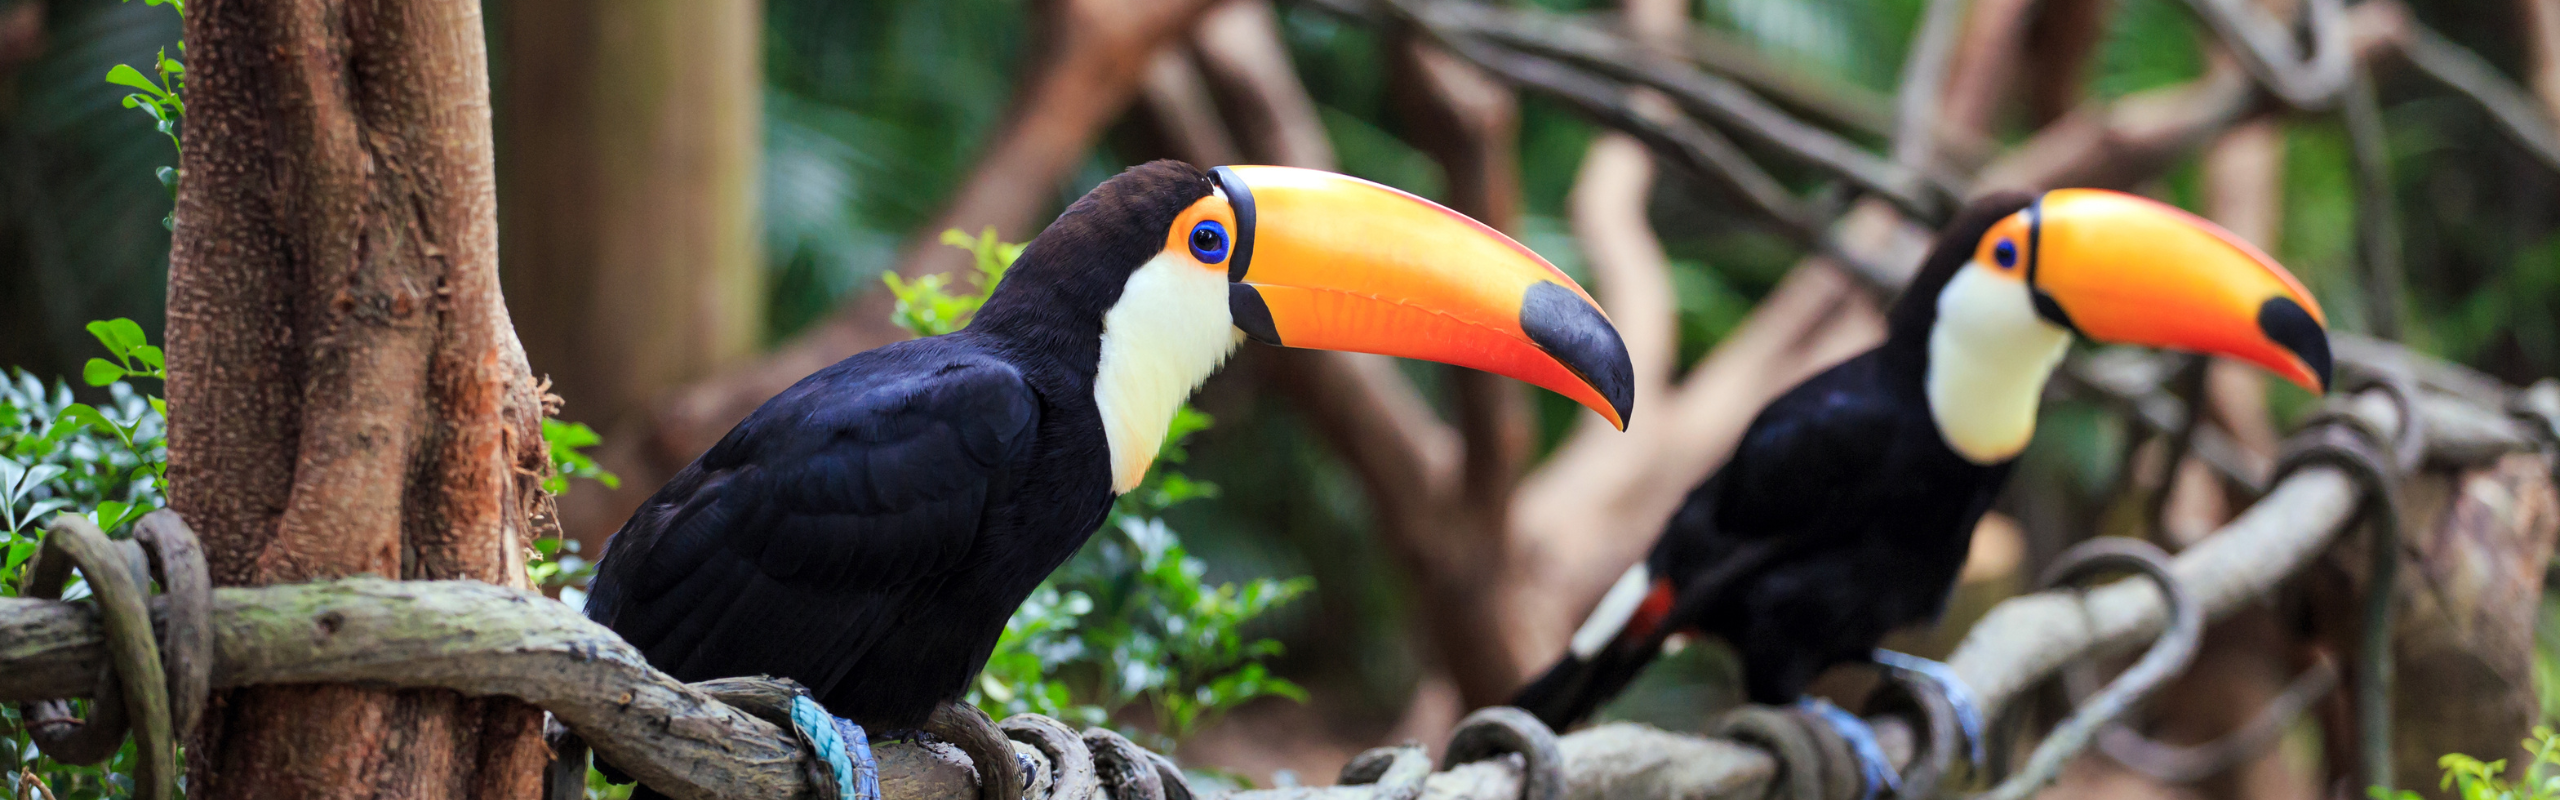 amazon forest toucan